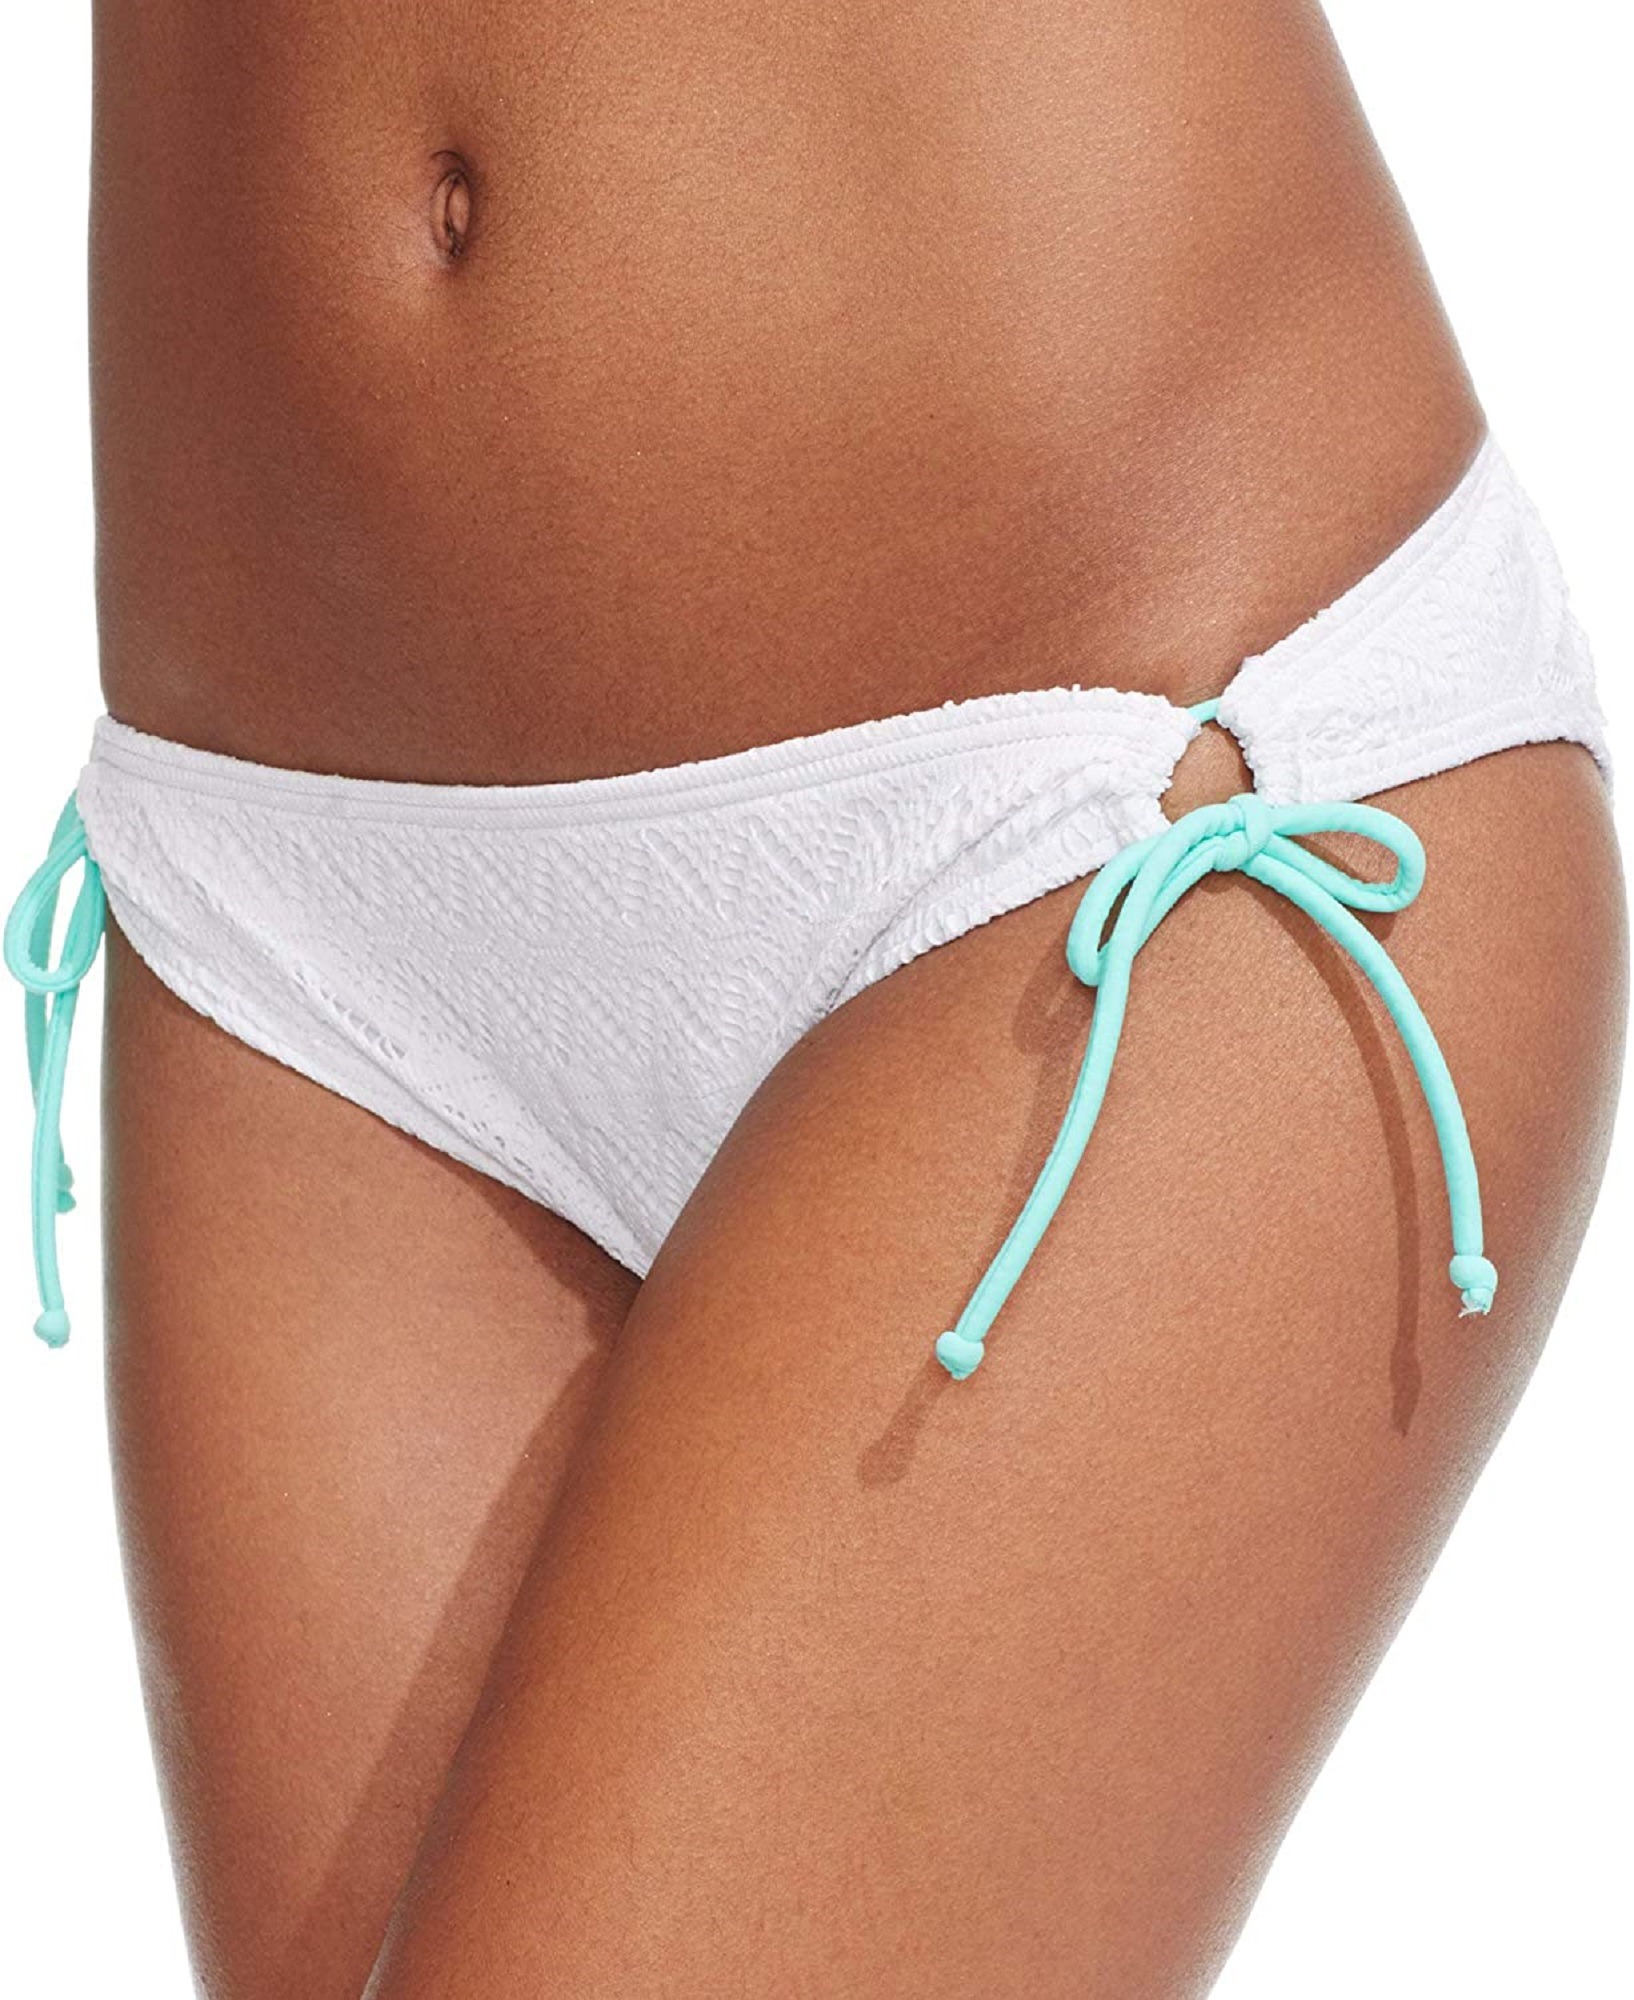 Hula Honey WHITE Crochet Side-Tie Hipster Bikini Swim Bottom, US Small - image 1 of 3